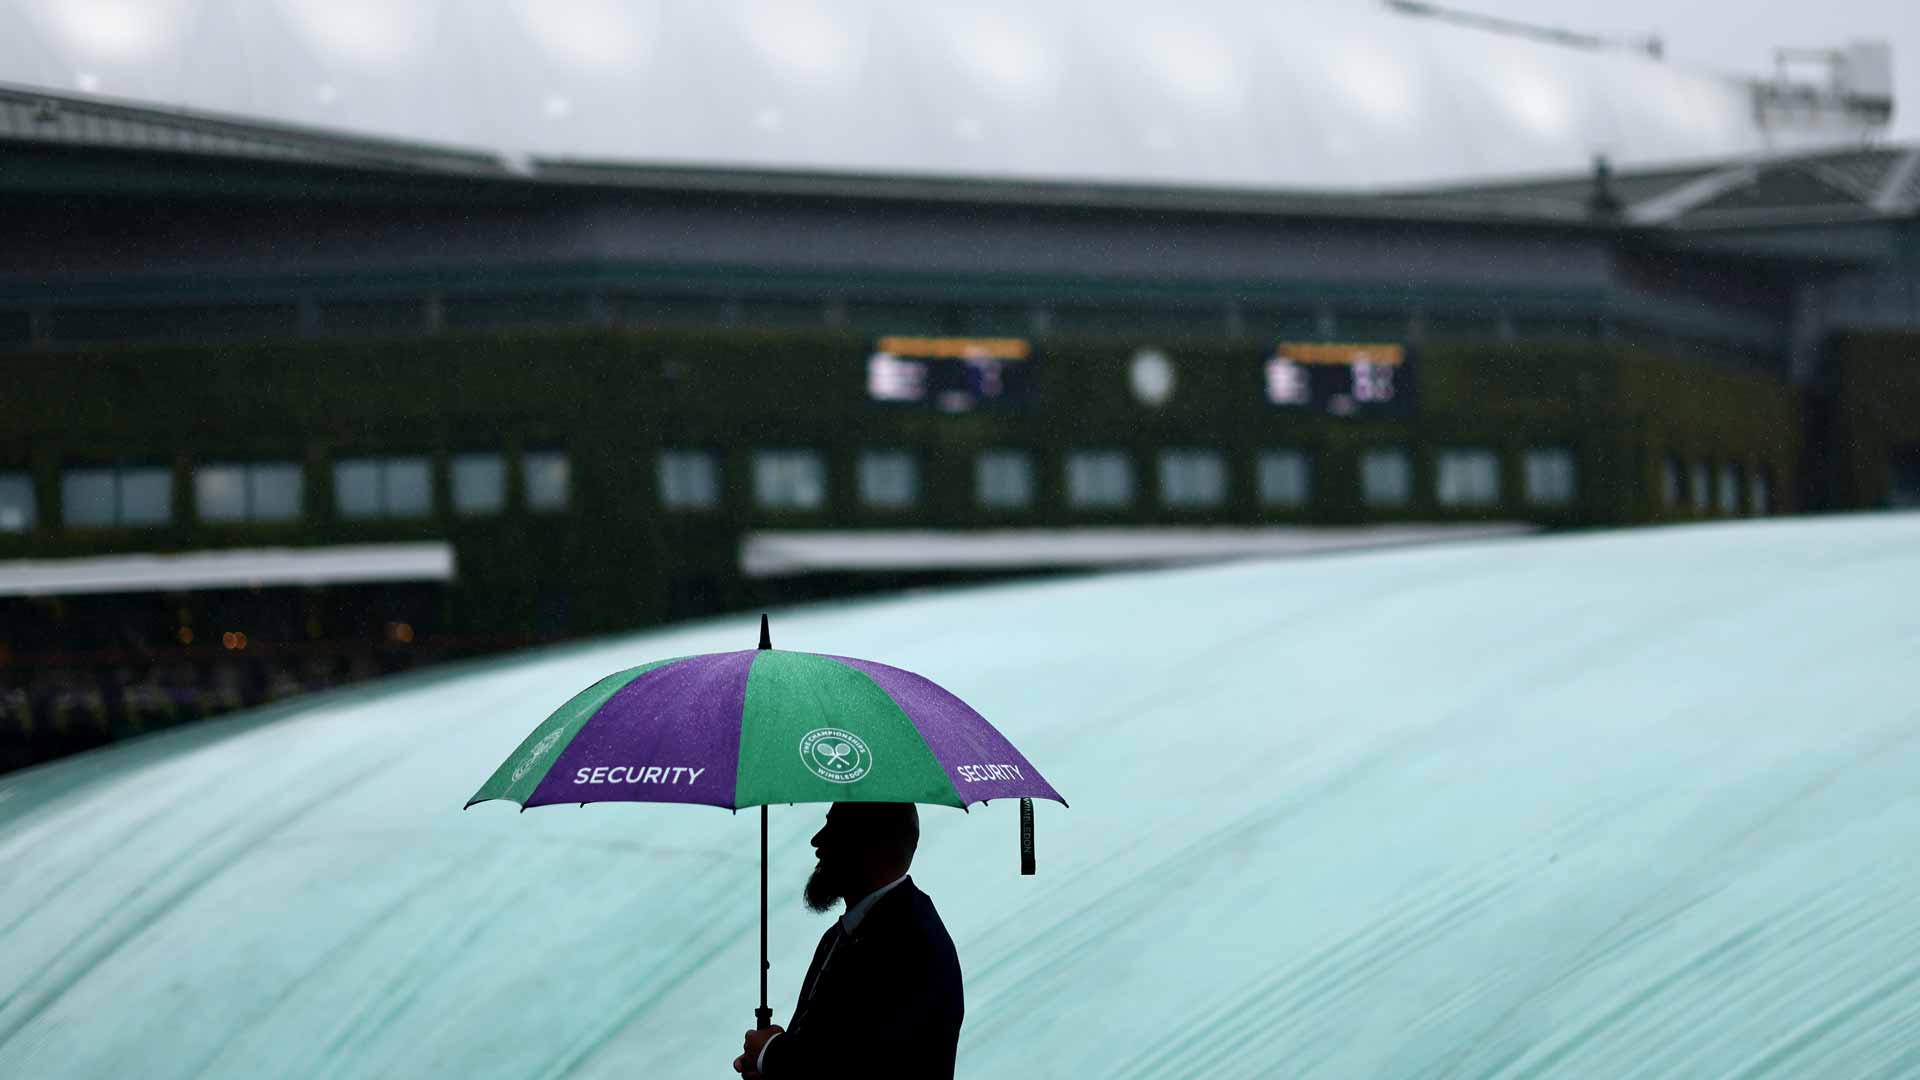 La lluvia anuló la mayor parte del juego al aire libre en Wimbledon el viernes.